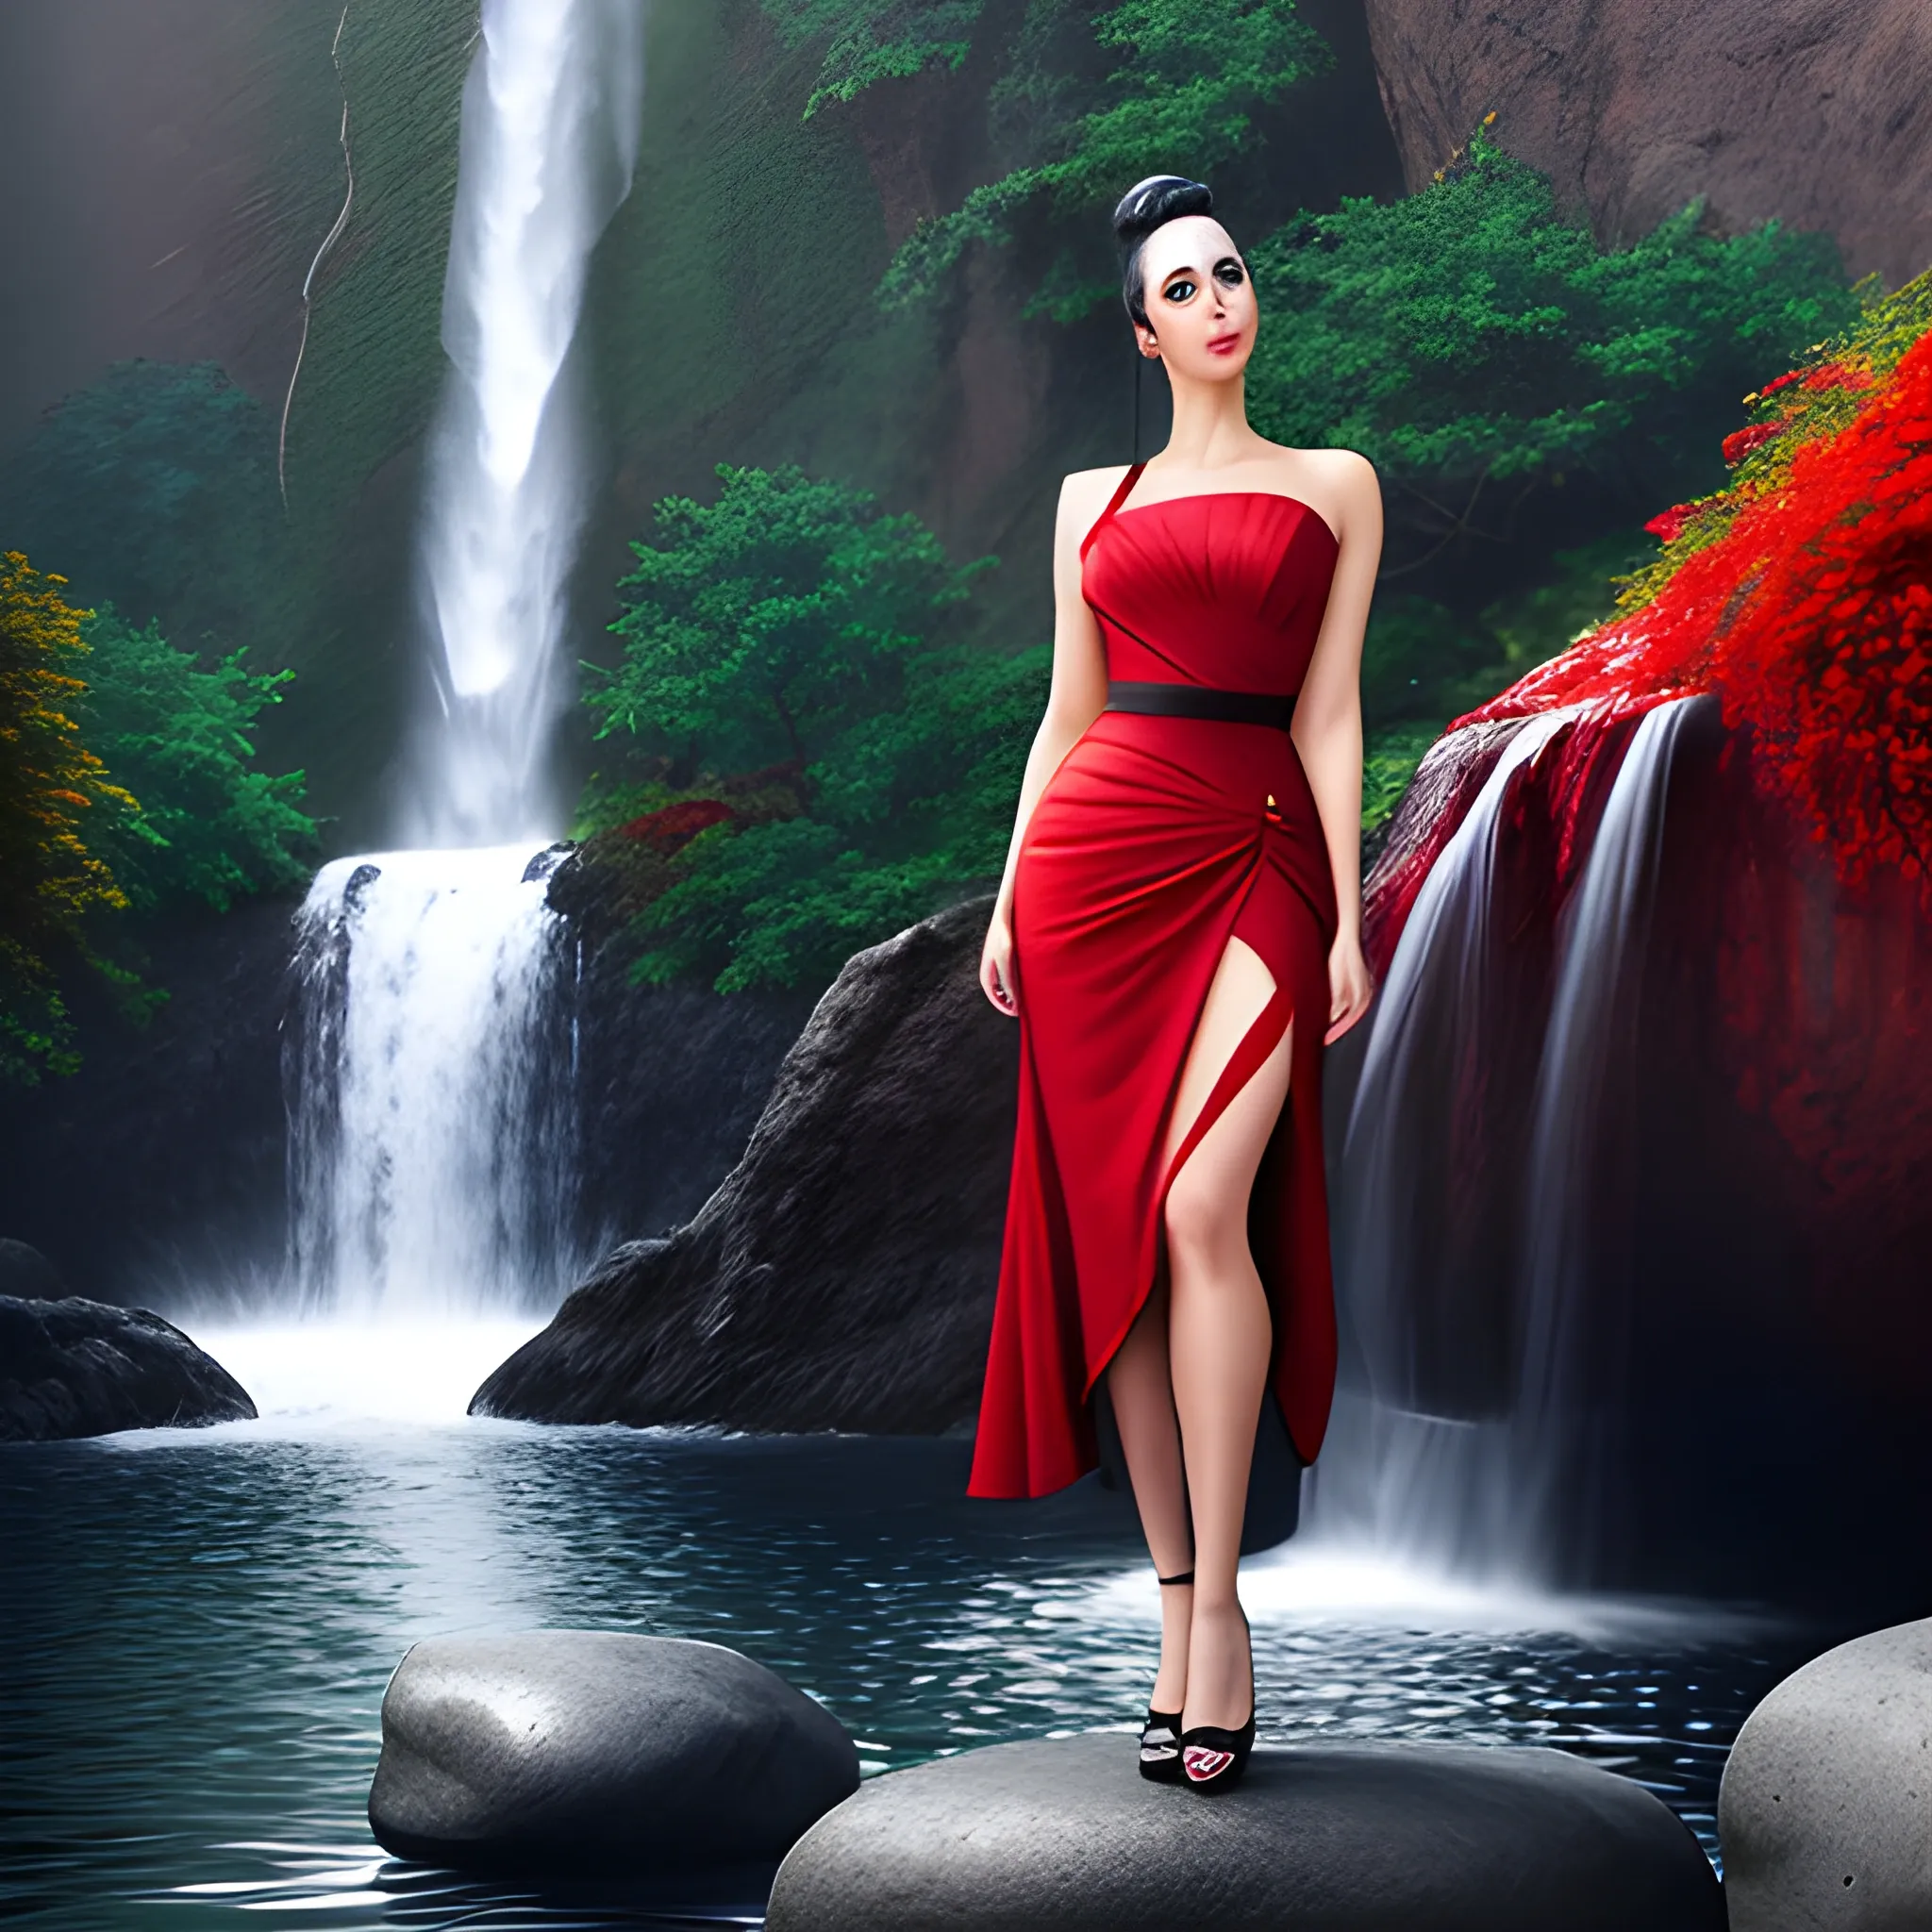 make it a beautiful girl, black hair, bun hair, standing on stone, red dress,  waterfall background, photorealistic, 4k,